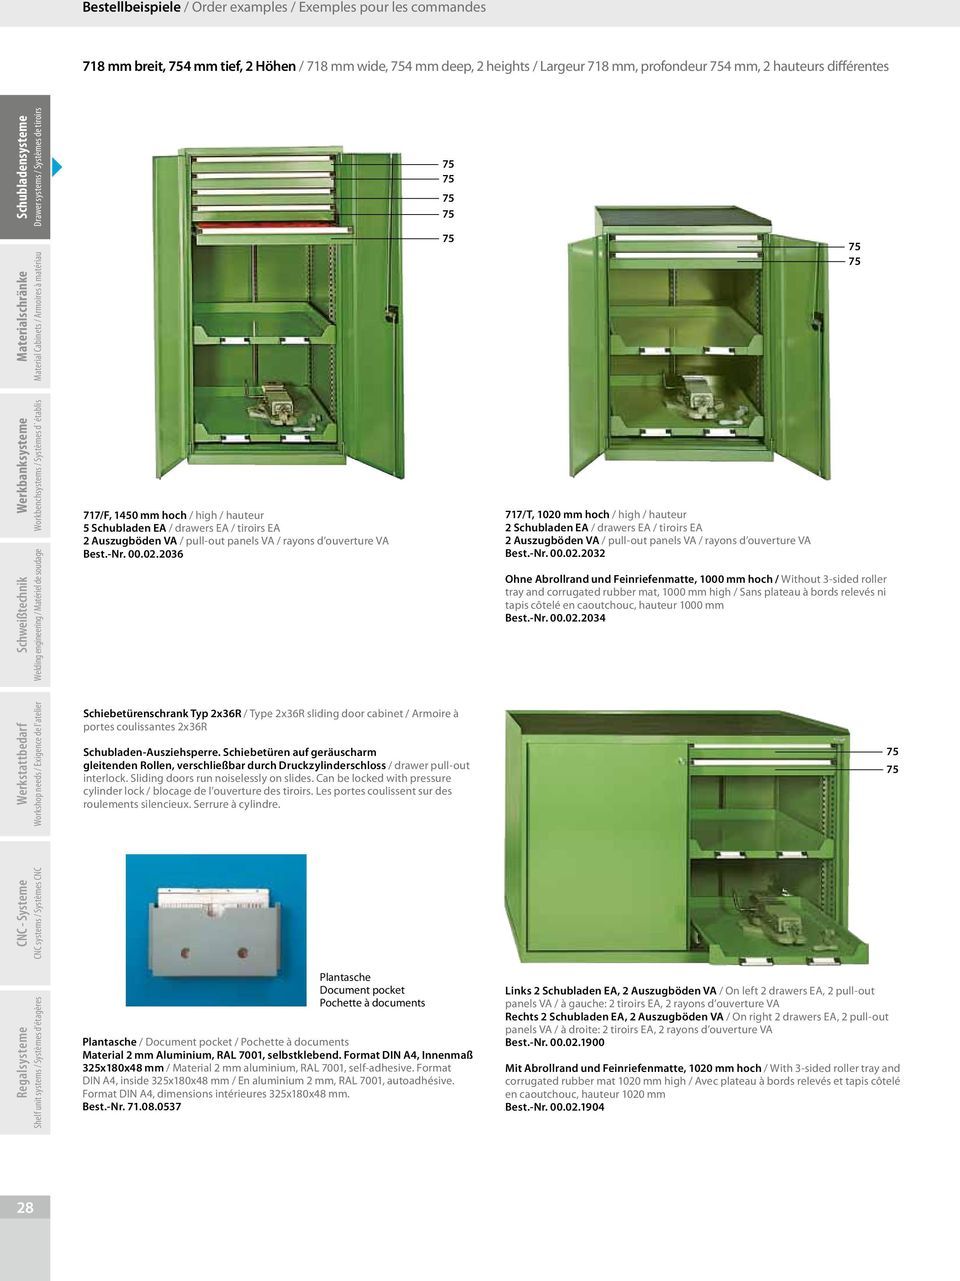 hoch / high / hauteur 5 Schubladen EA / drawers EA / tiroirs EA 2 Auszugböden VA / pull-out panels VA / rayons d ouverture VA 00.02.